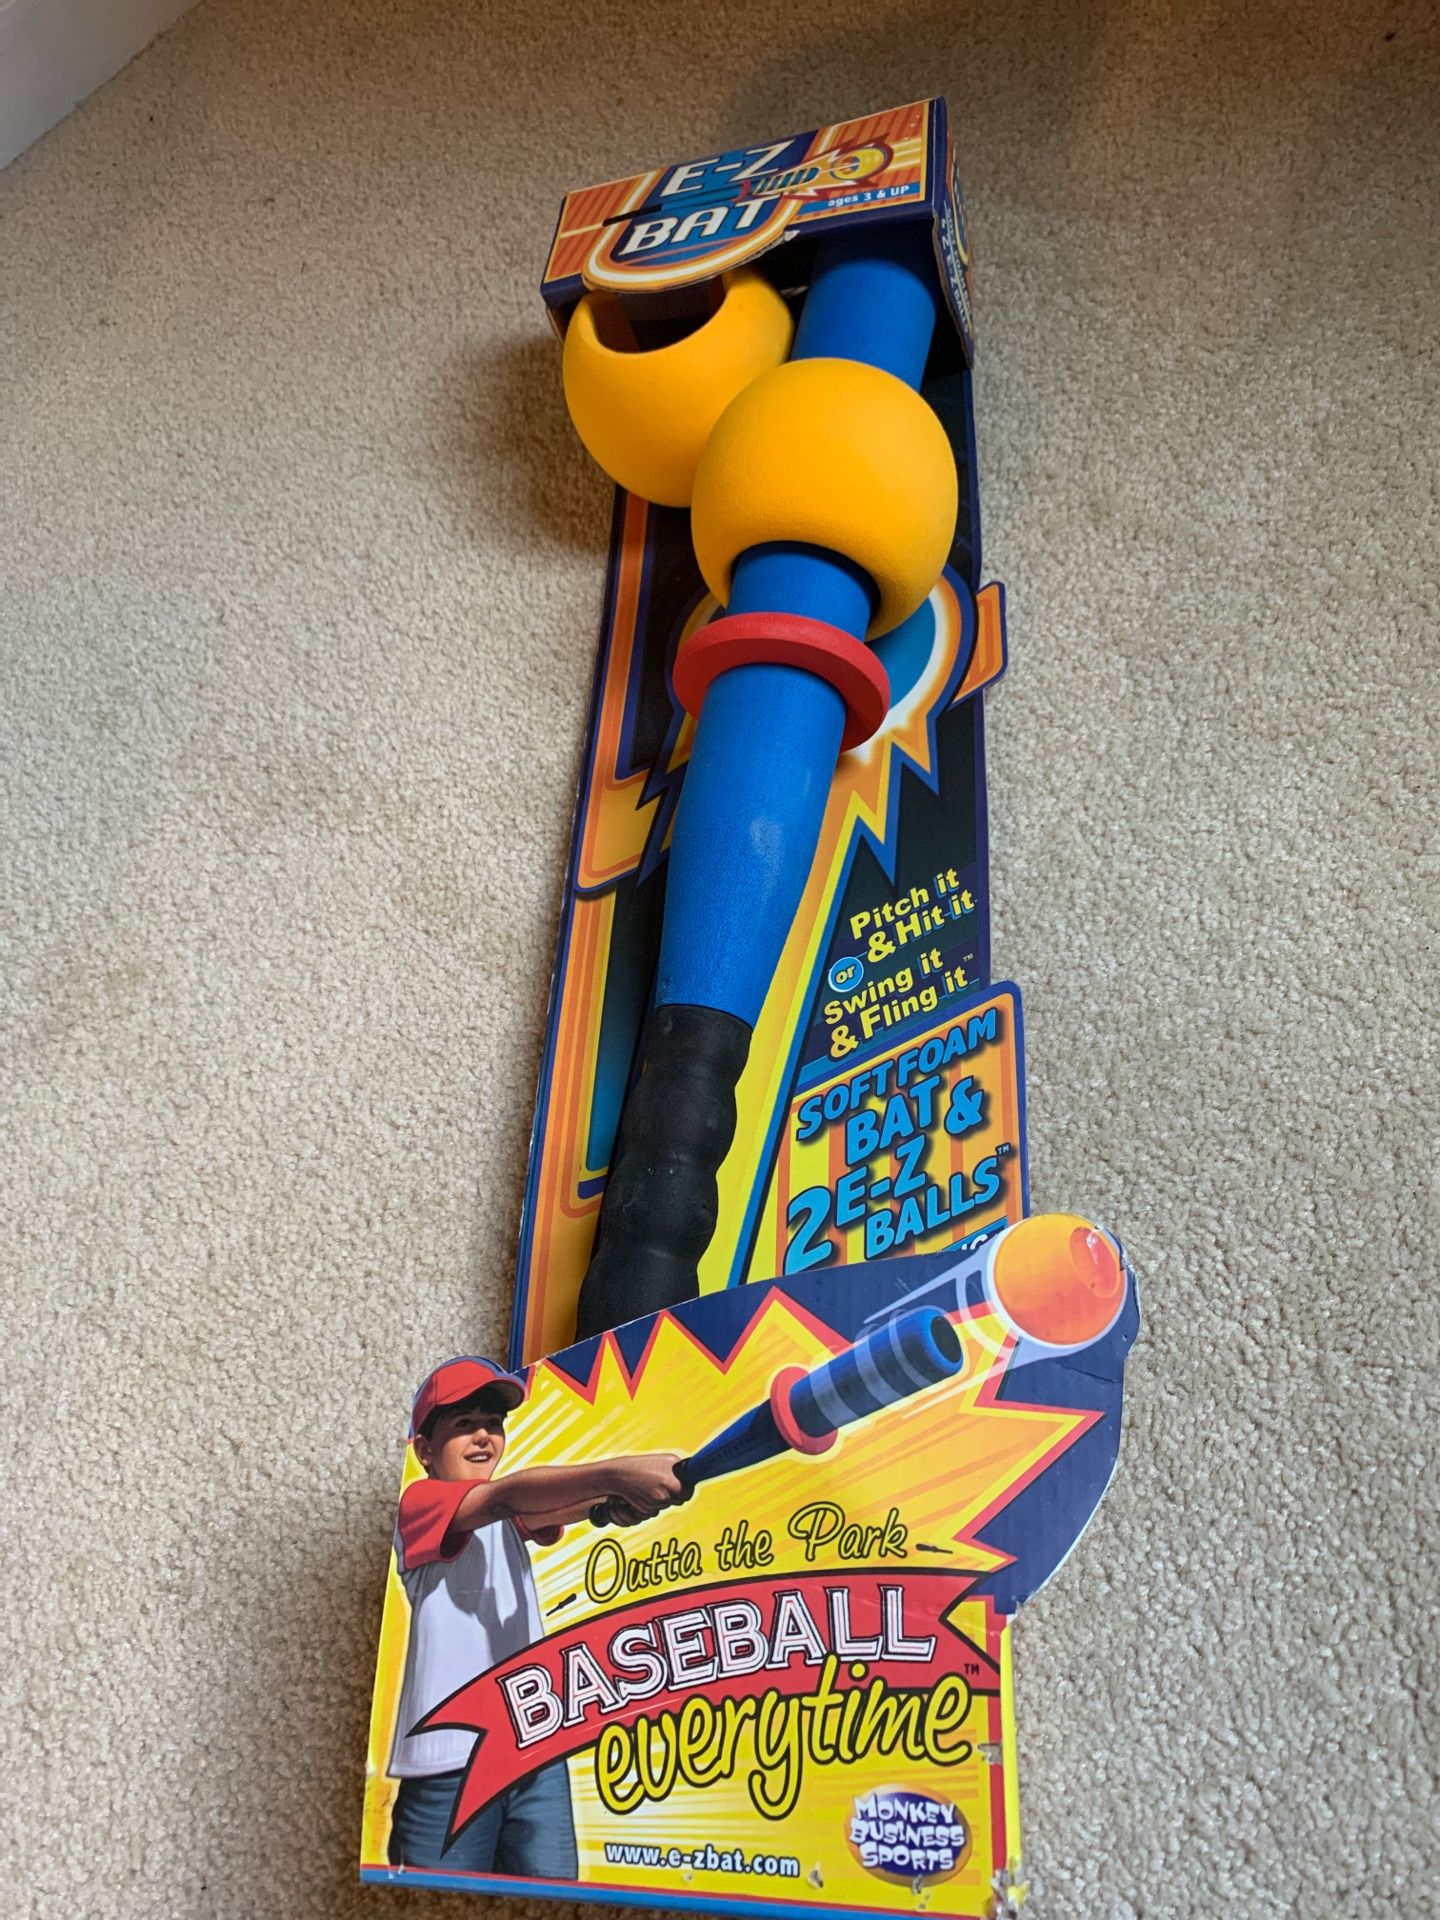 E-z bat baseball